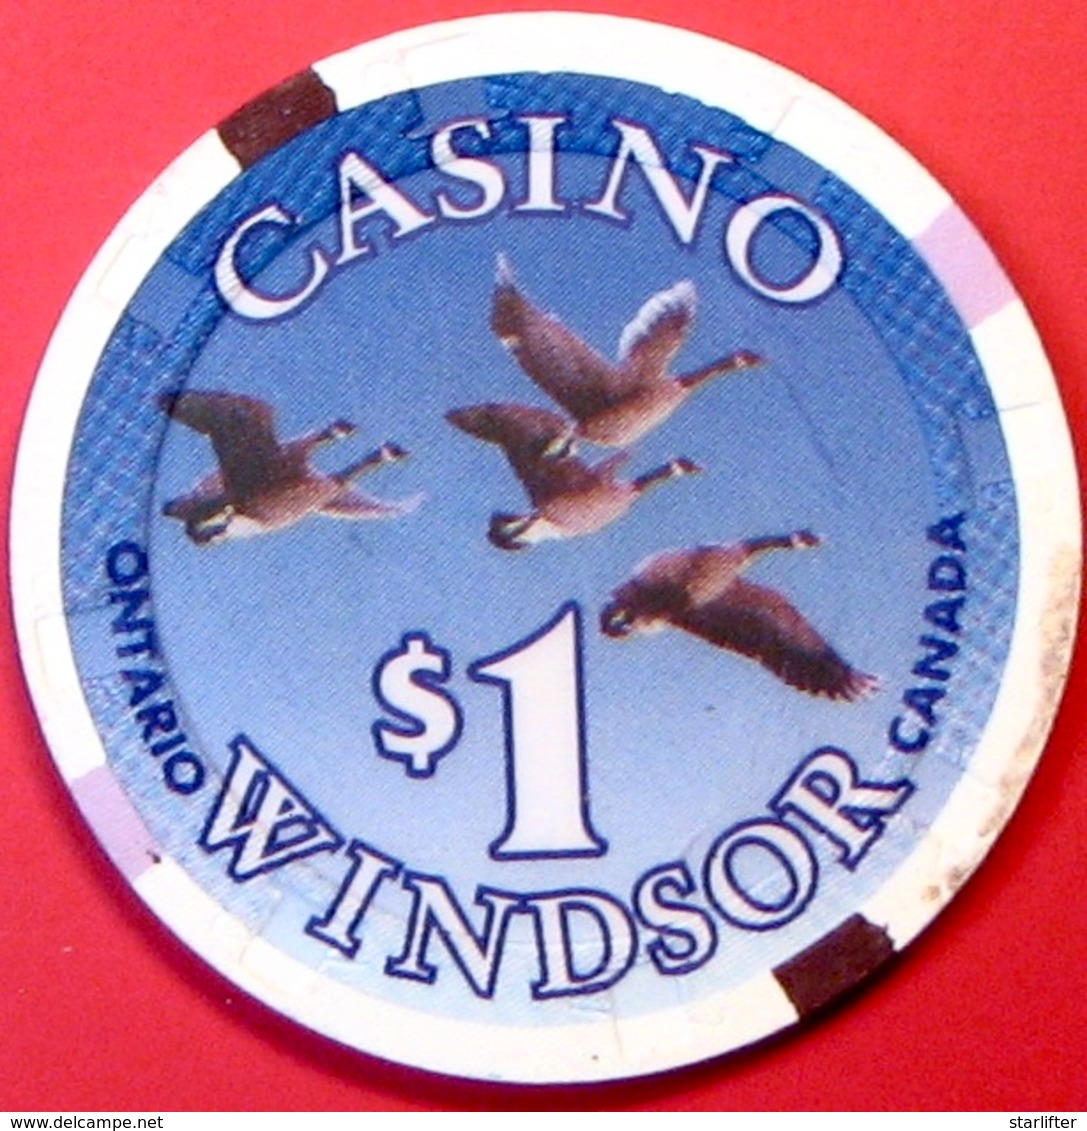 $1 Casino Chip. Northern Belle, Ontario, Canada. M84. - Casino